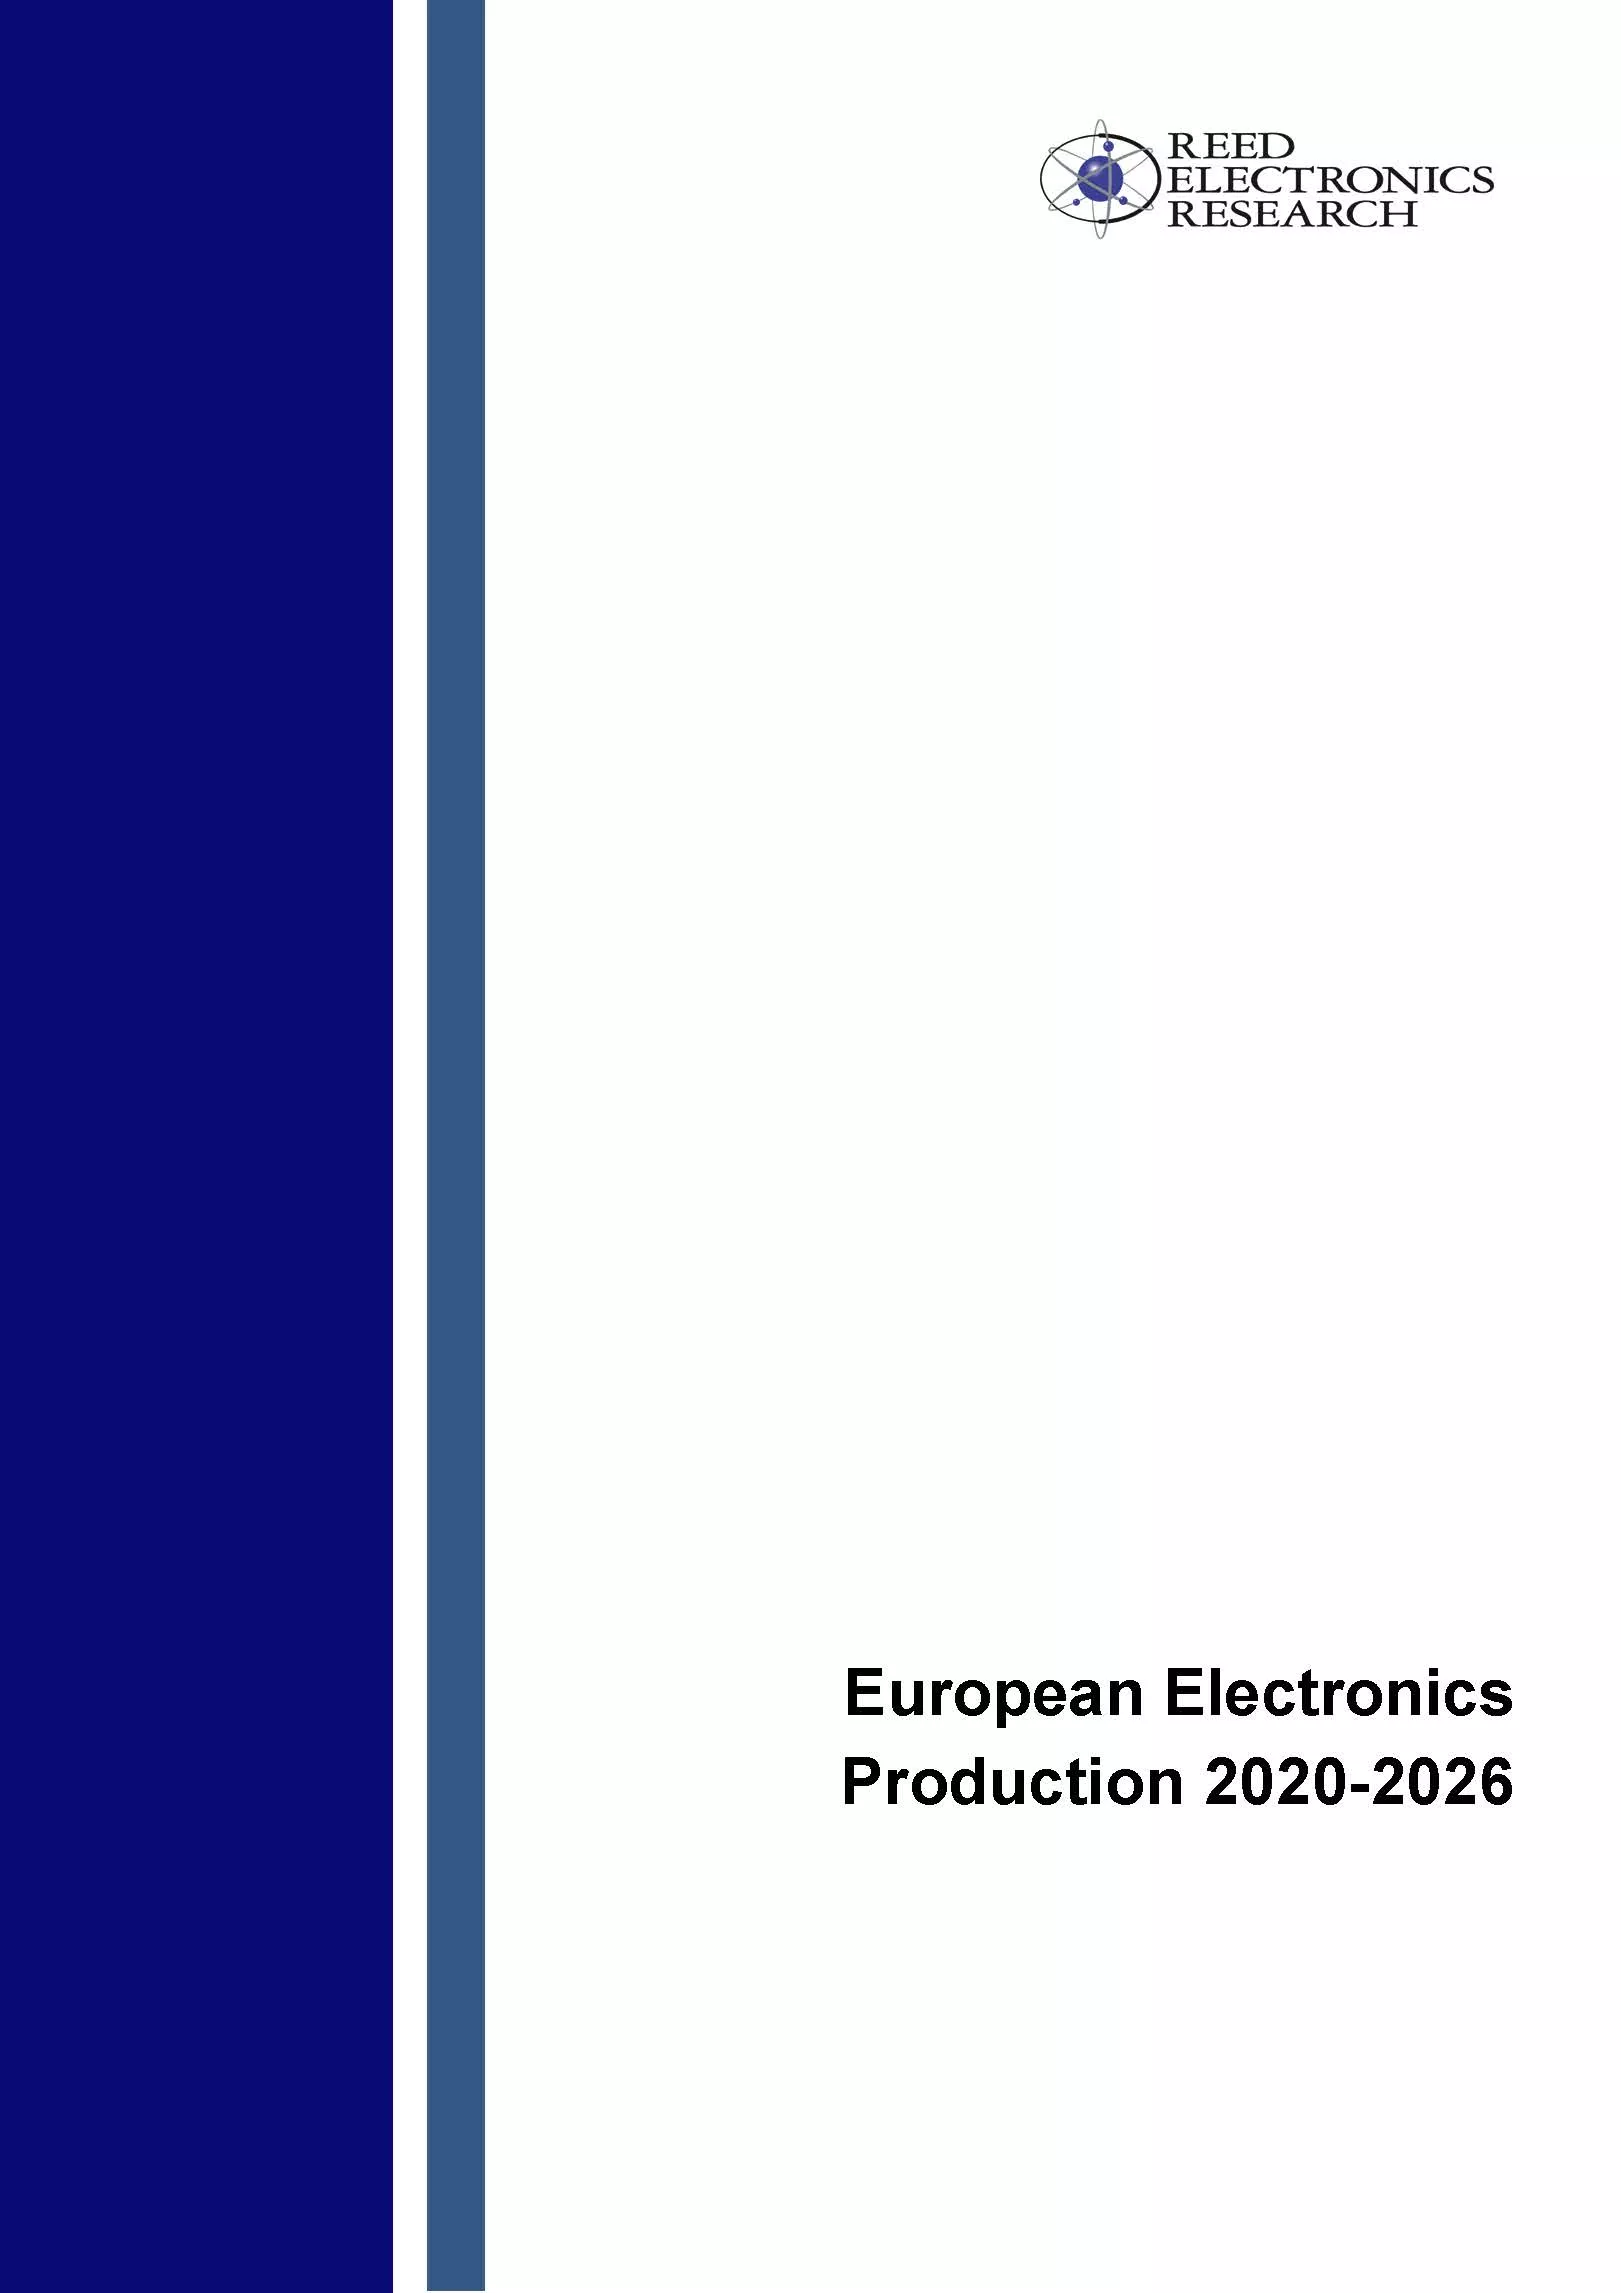 European Electronics Production 2000-2026